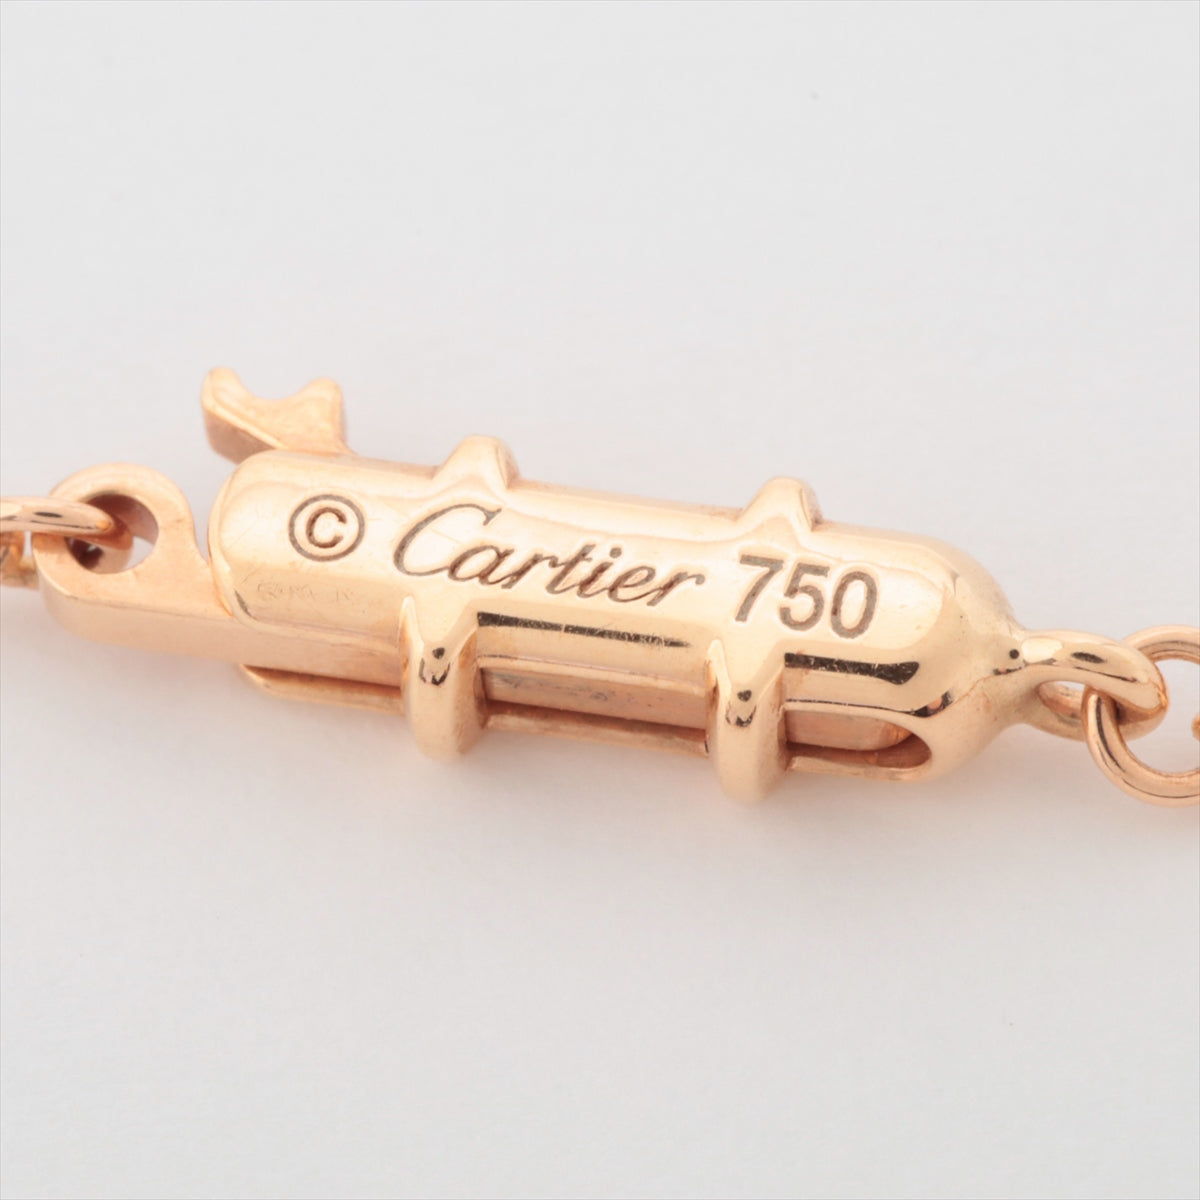 Cartier C Heart diamond Necklace 750(PG) 5.6g